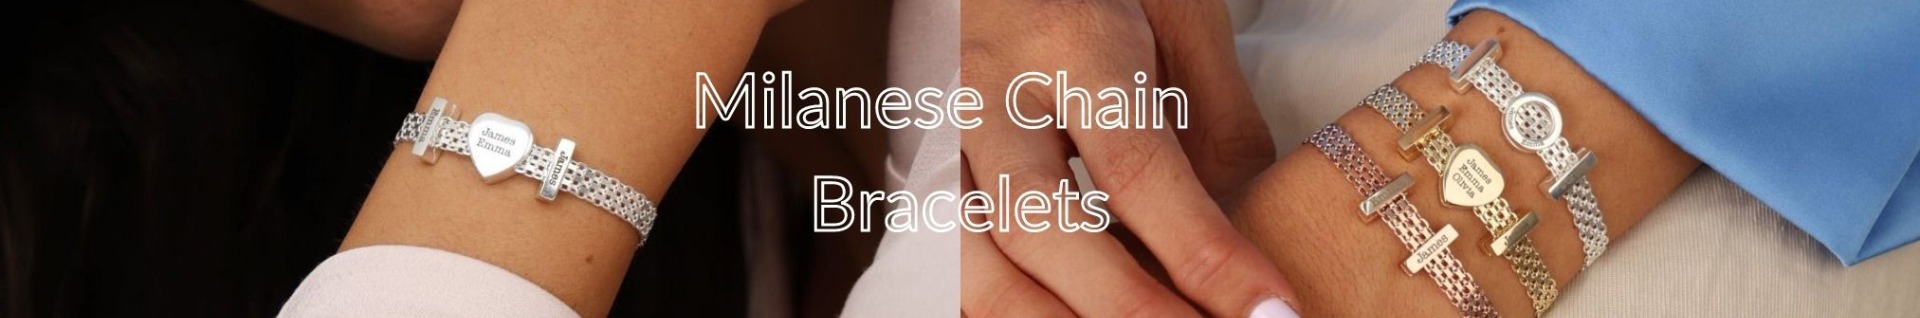 Milanese Chain Bracelets